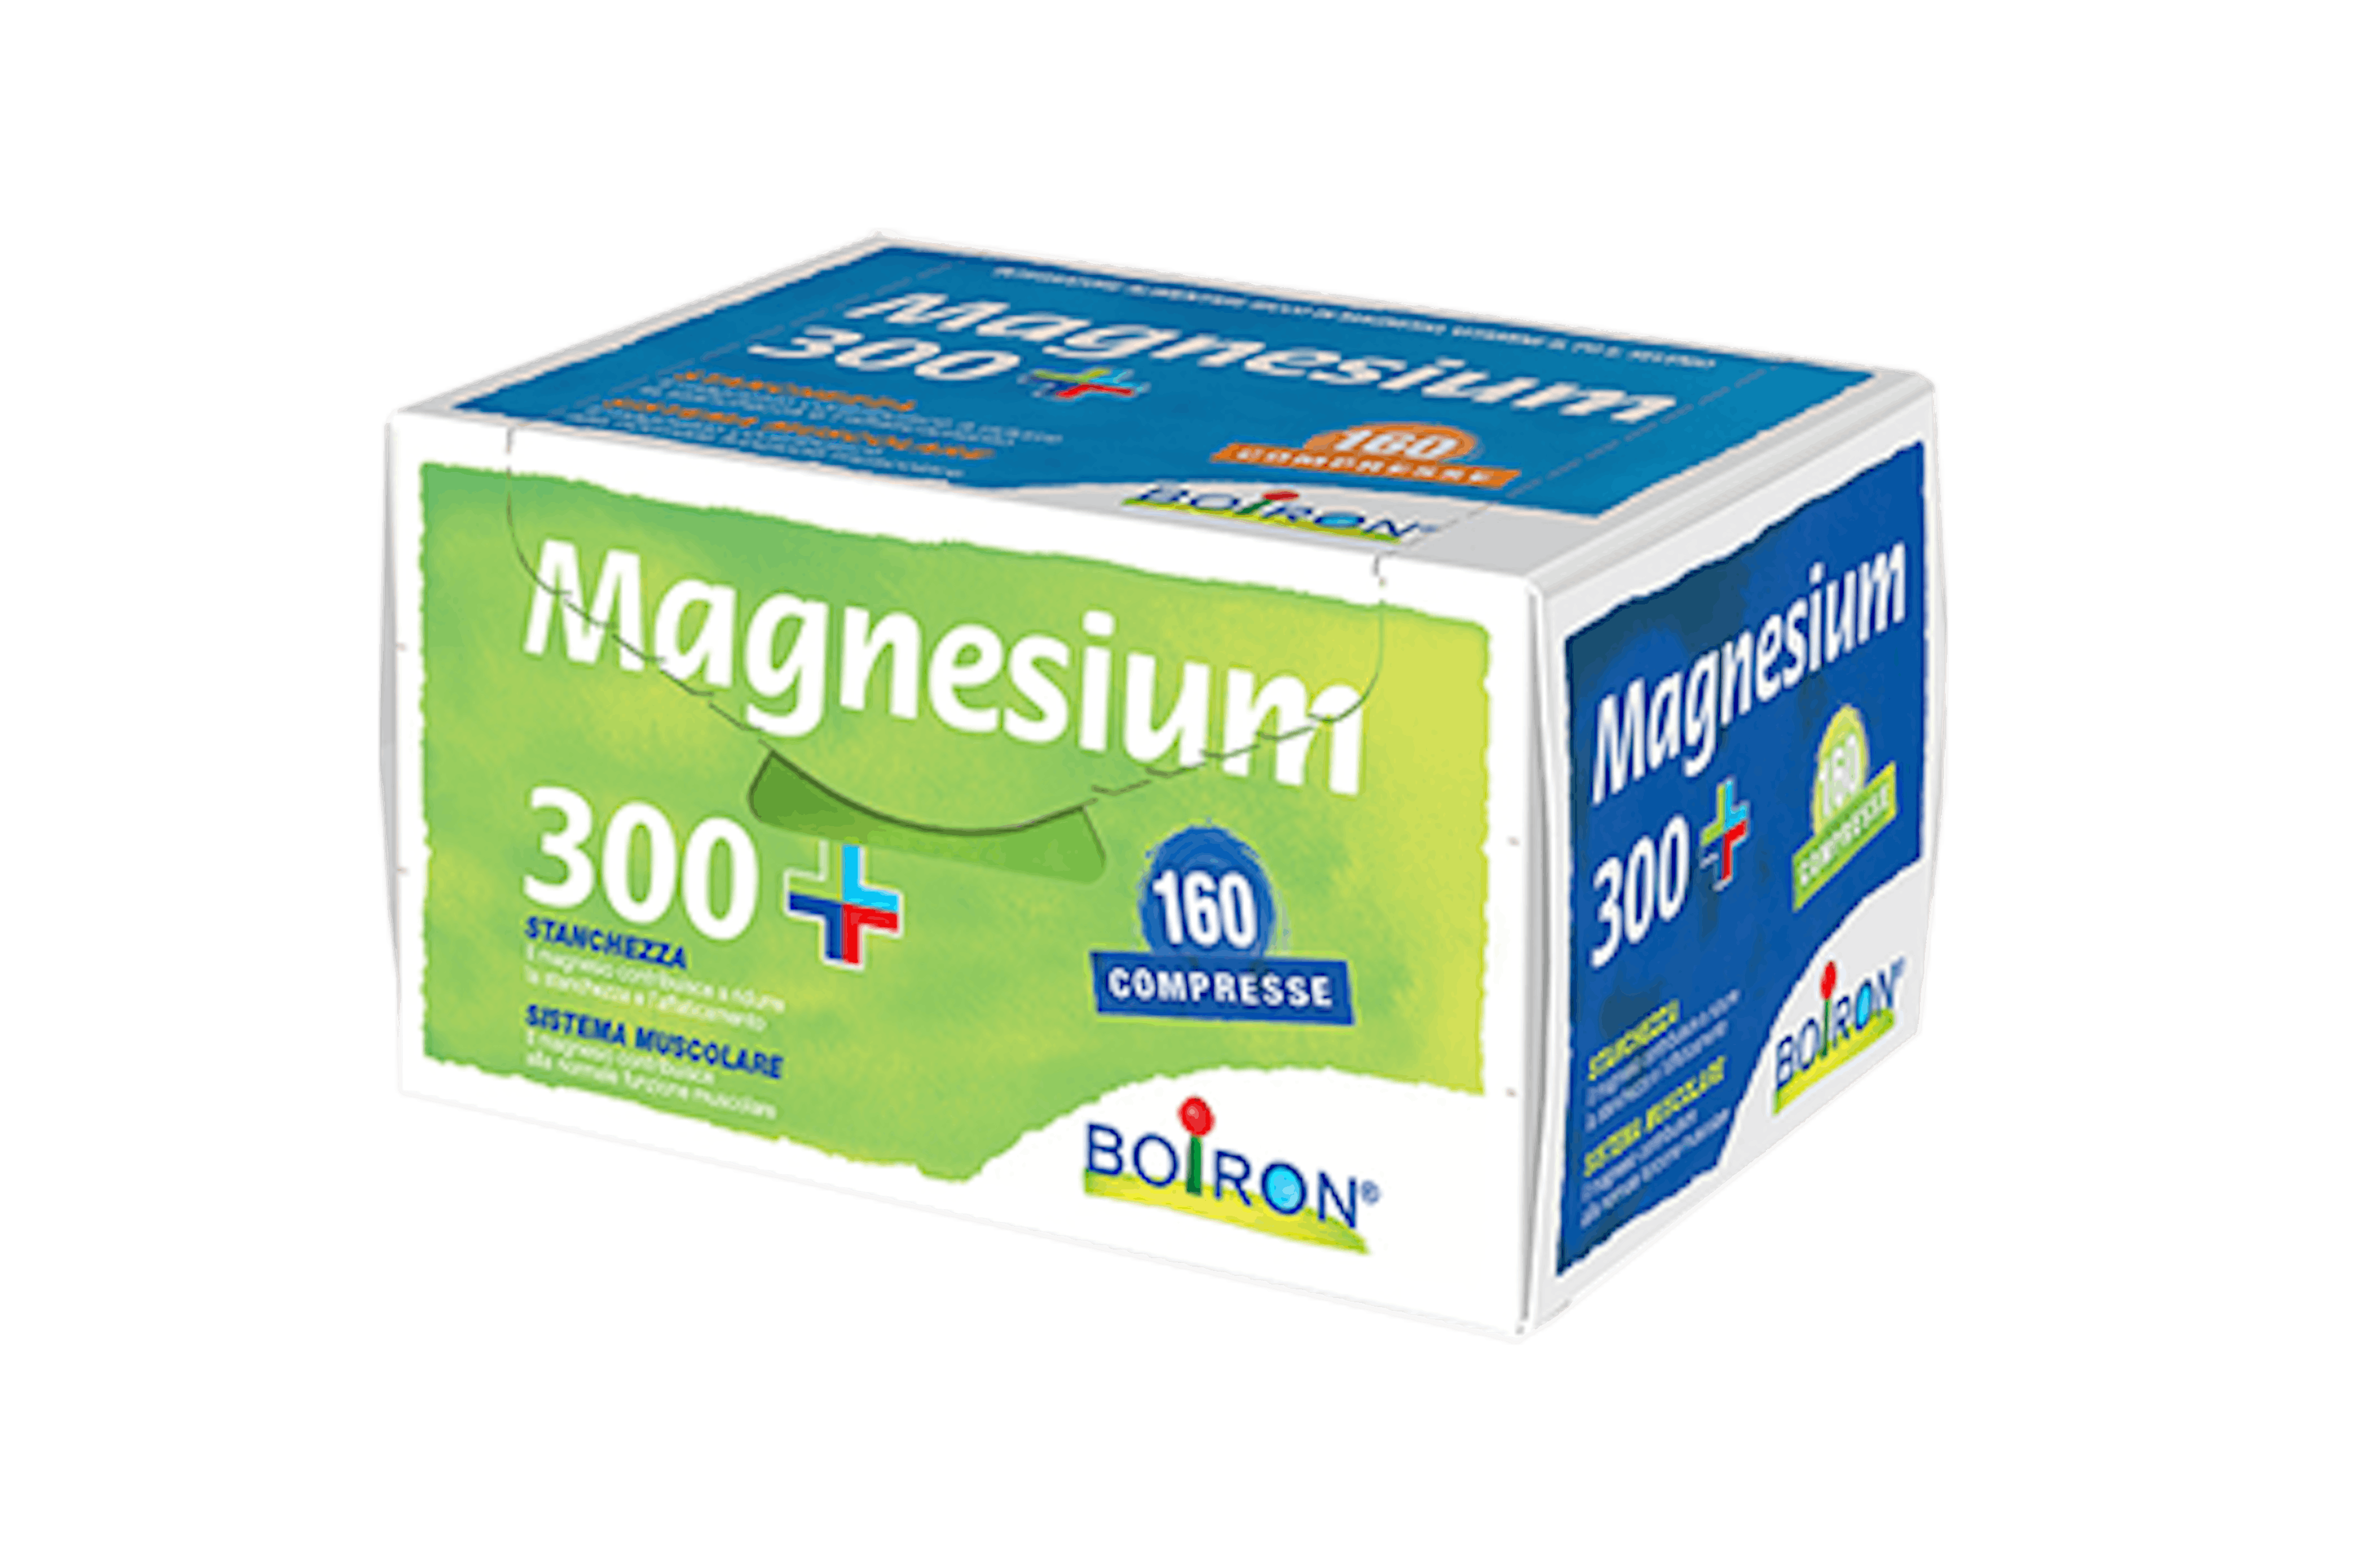 Magnesium 300+ 160 compresse da 500 mg.